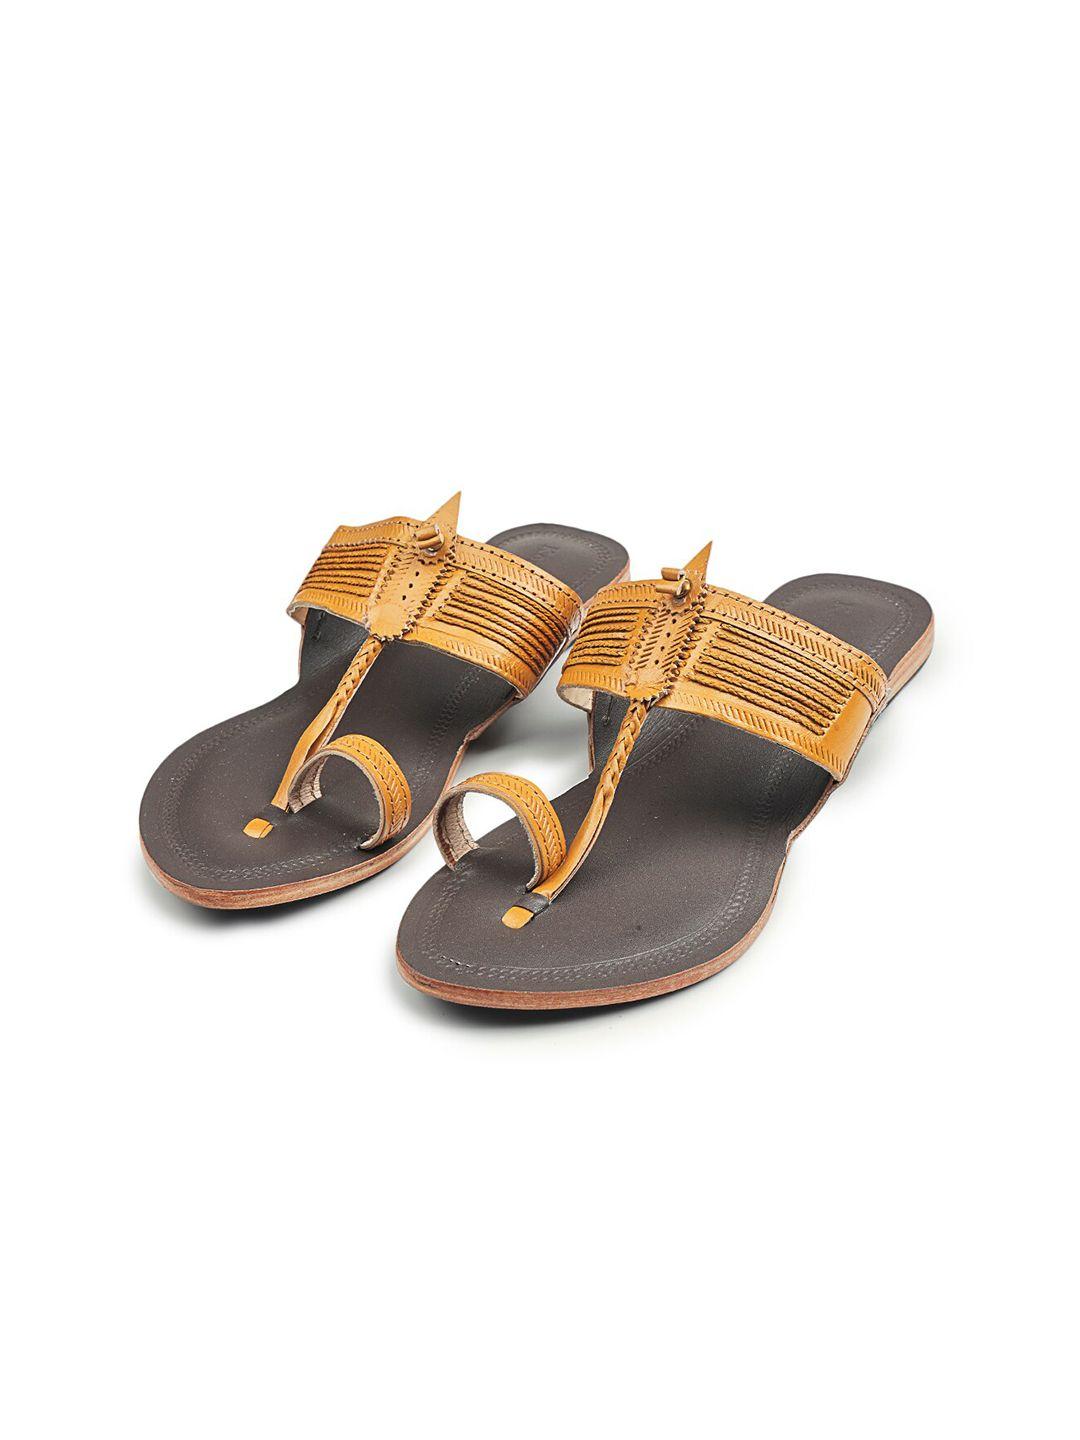 korakari textured leather ethnic one toe flats